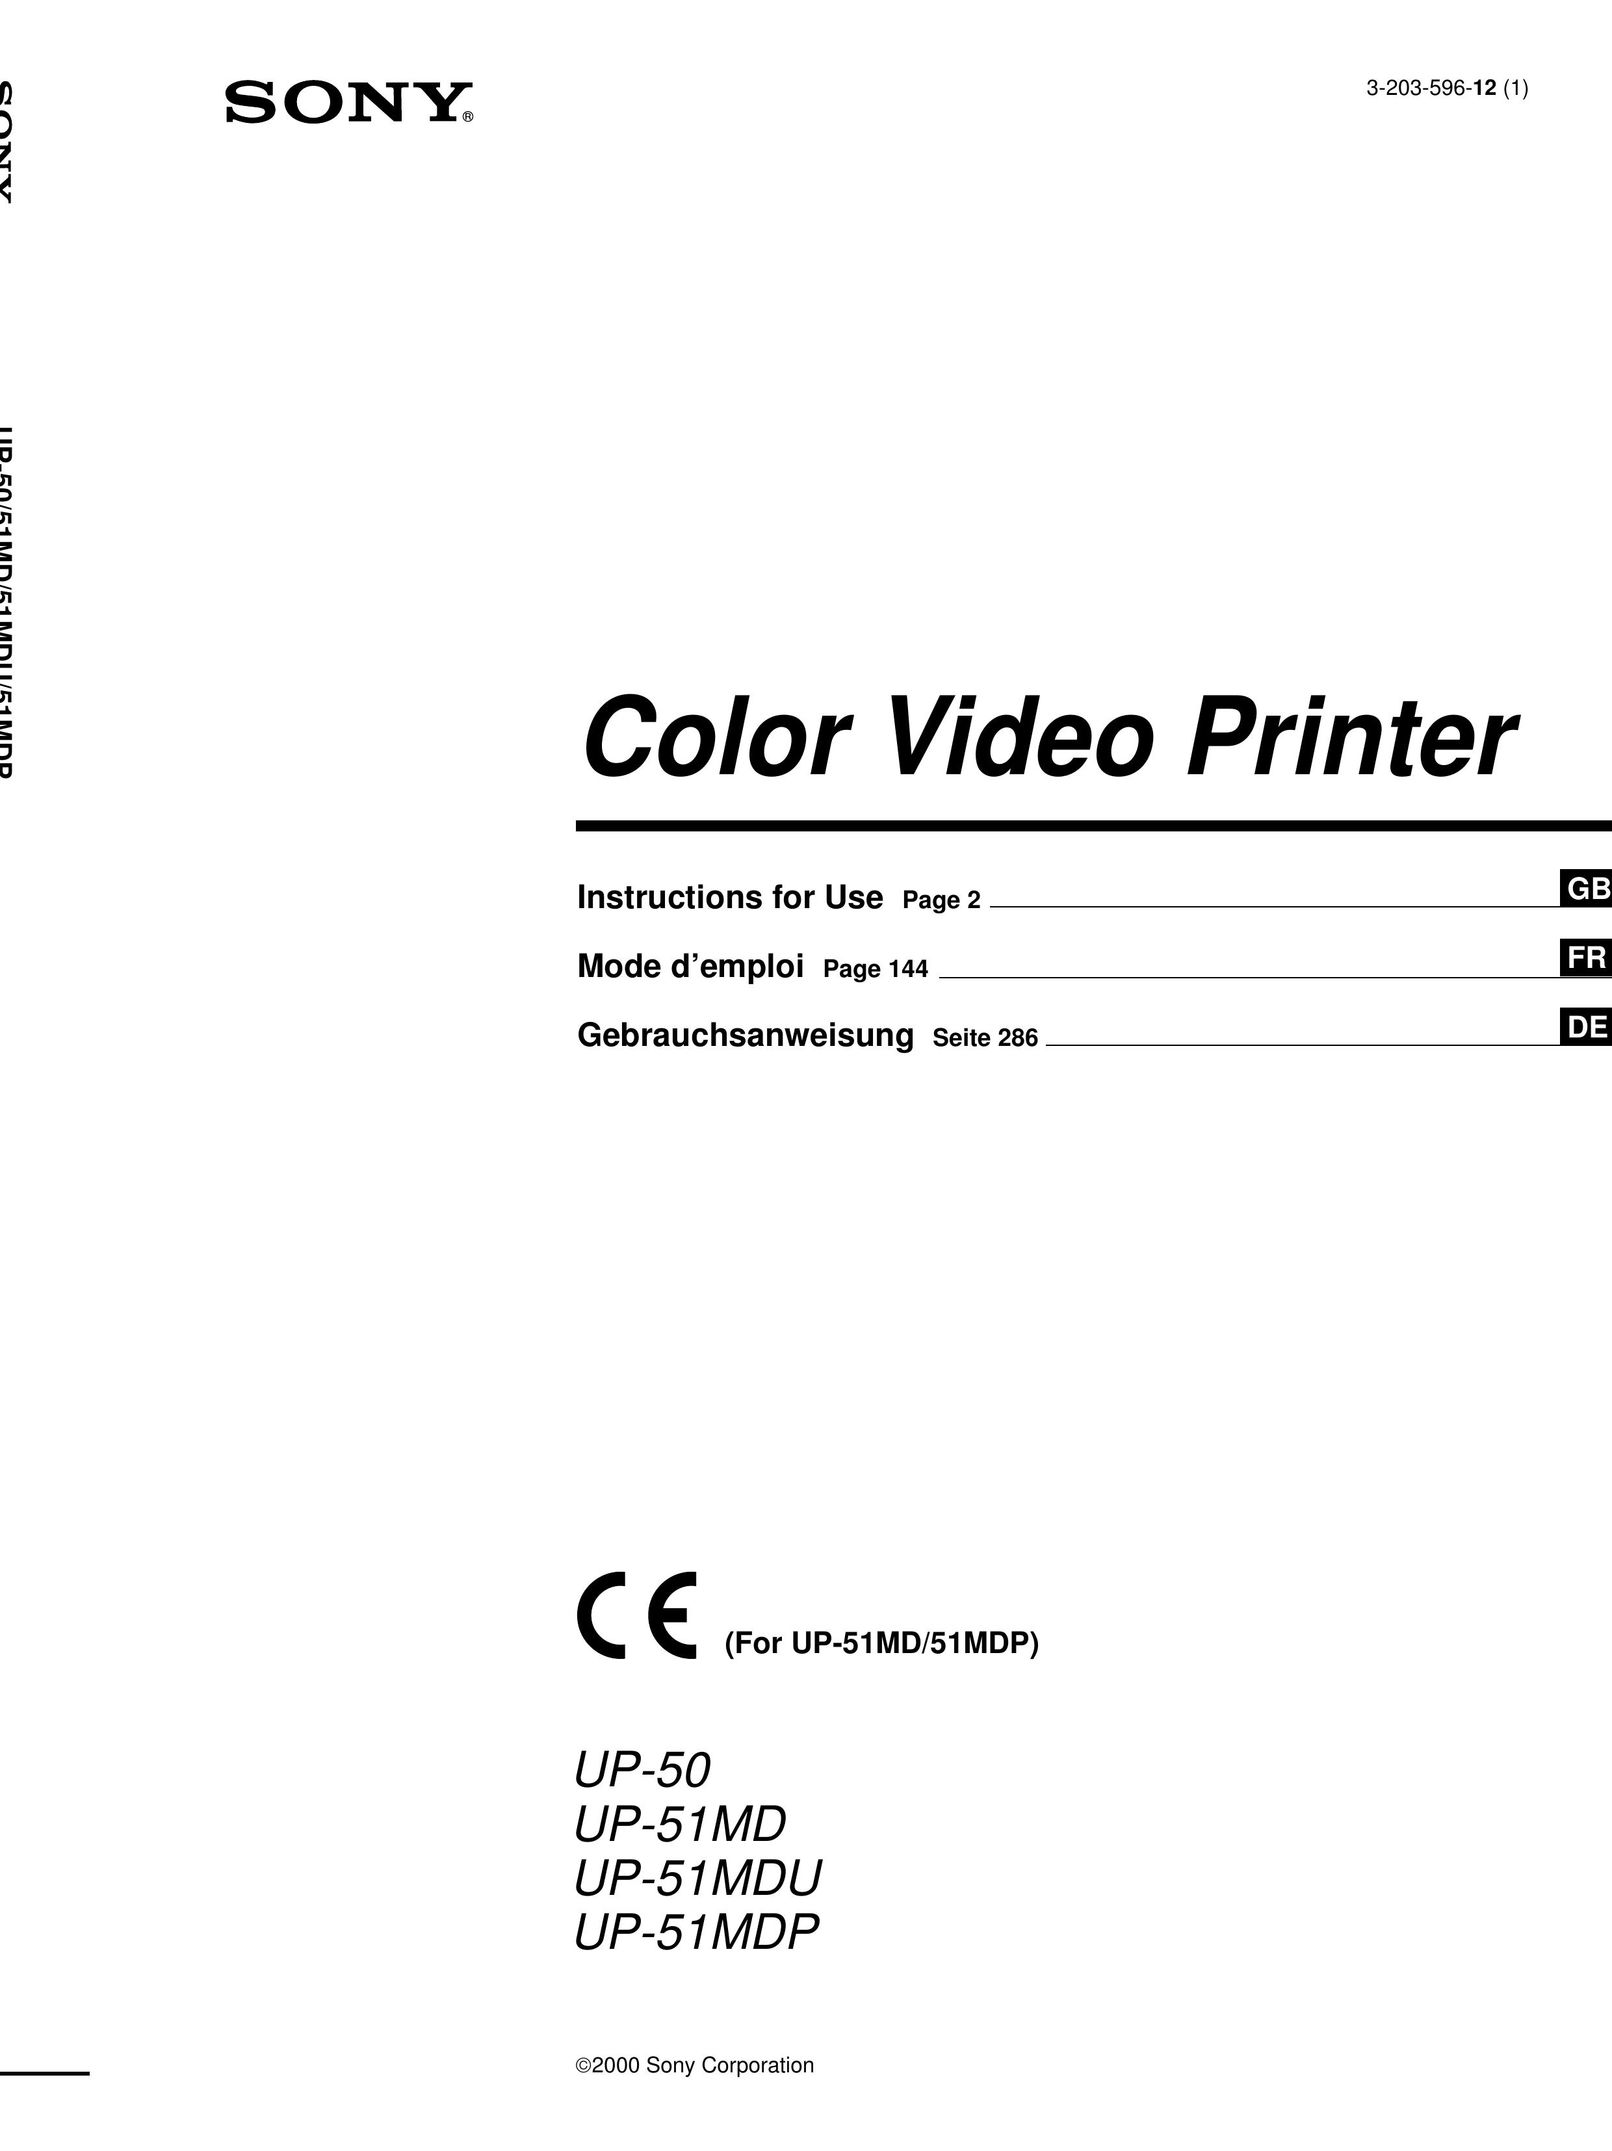 Sony UP-50 Printer User Manual